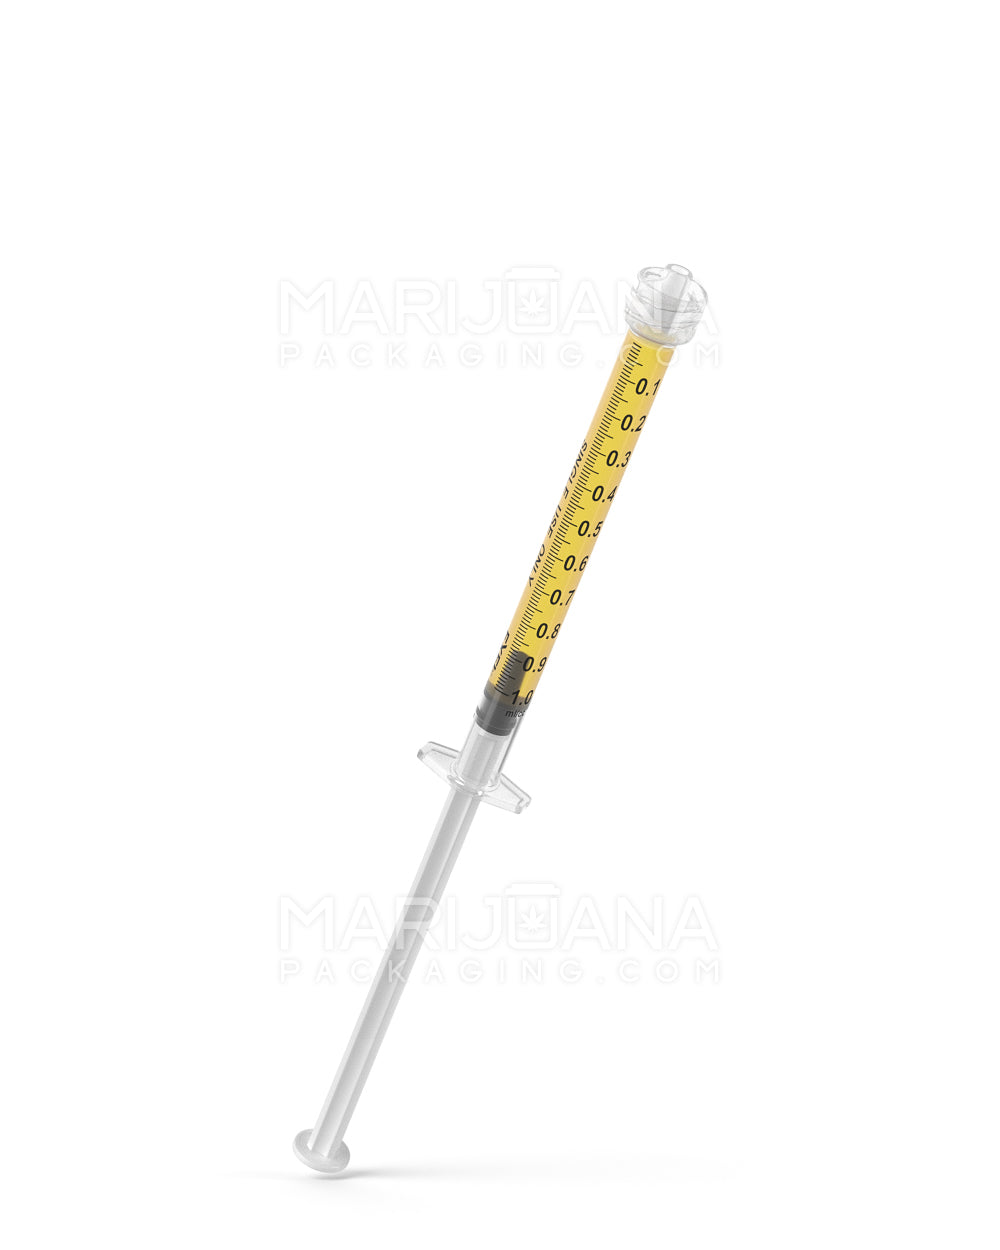 Luer Lock | Plastic Dab Applicator Syringes | 1mL - 0.1mL Increments - 100 Count - 6